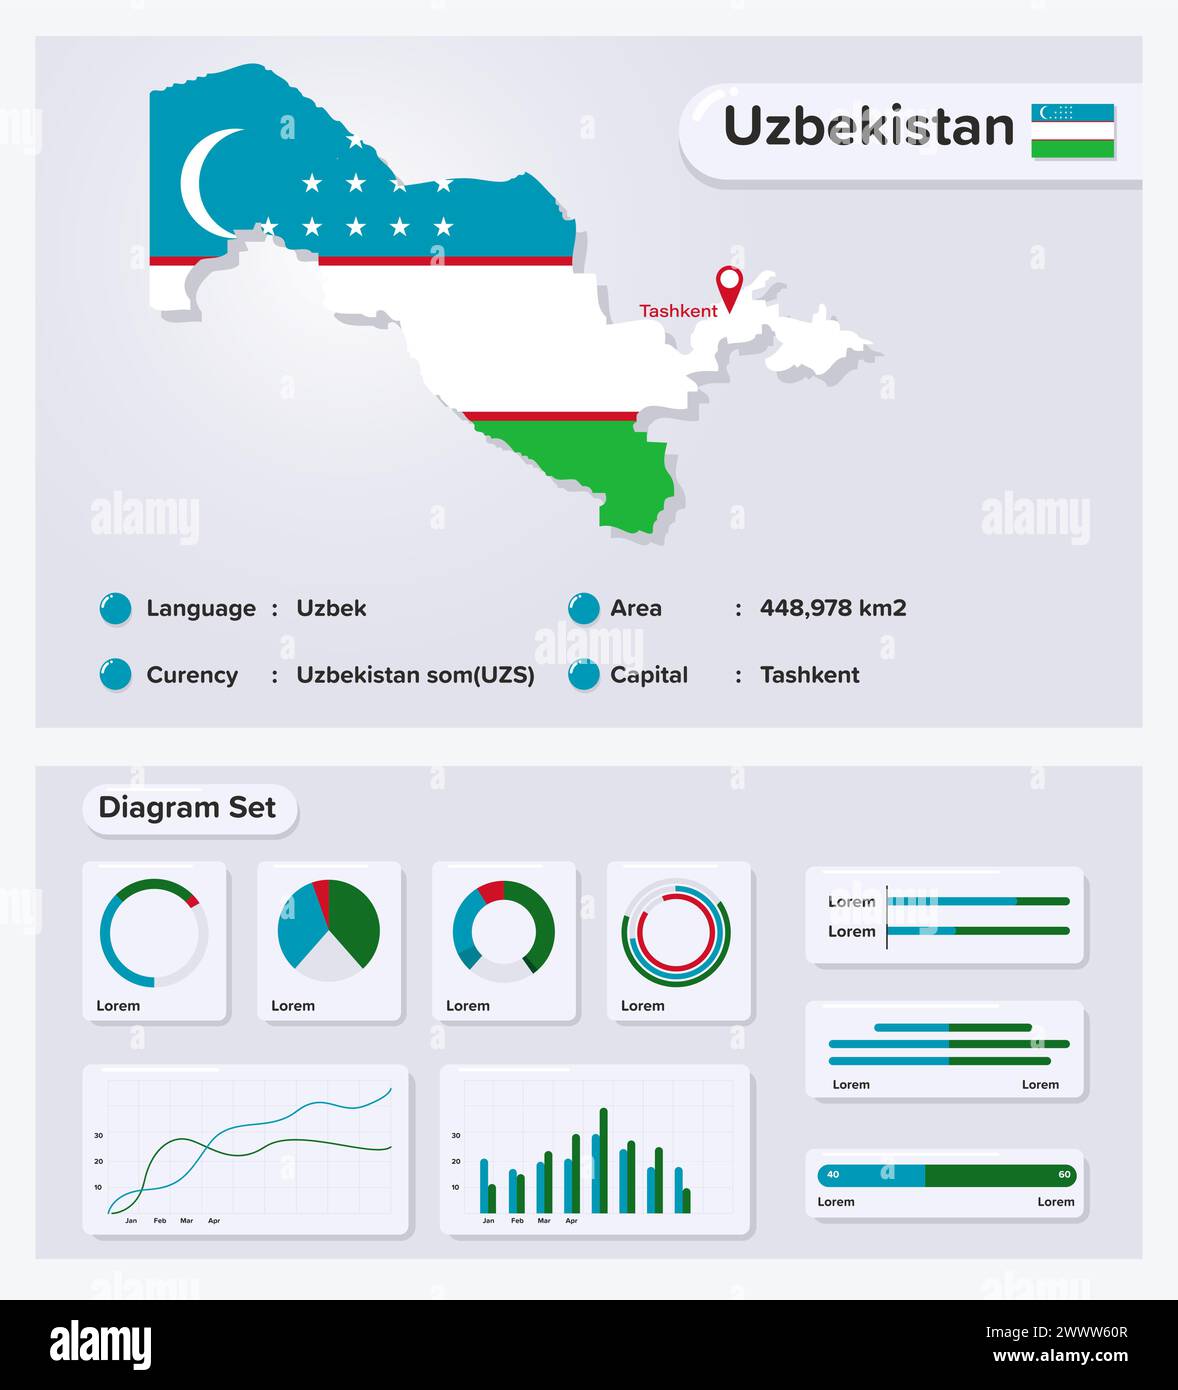 Uzbekistan Infographic Vector Illustration, Uzbekistan Statistical Data Element, Information Board With Flag Map, Uzbekistan Map Flag With Diagram Set Stock Vector